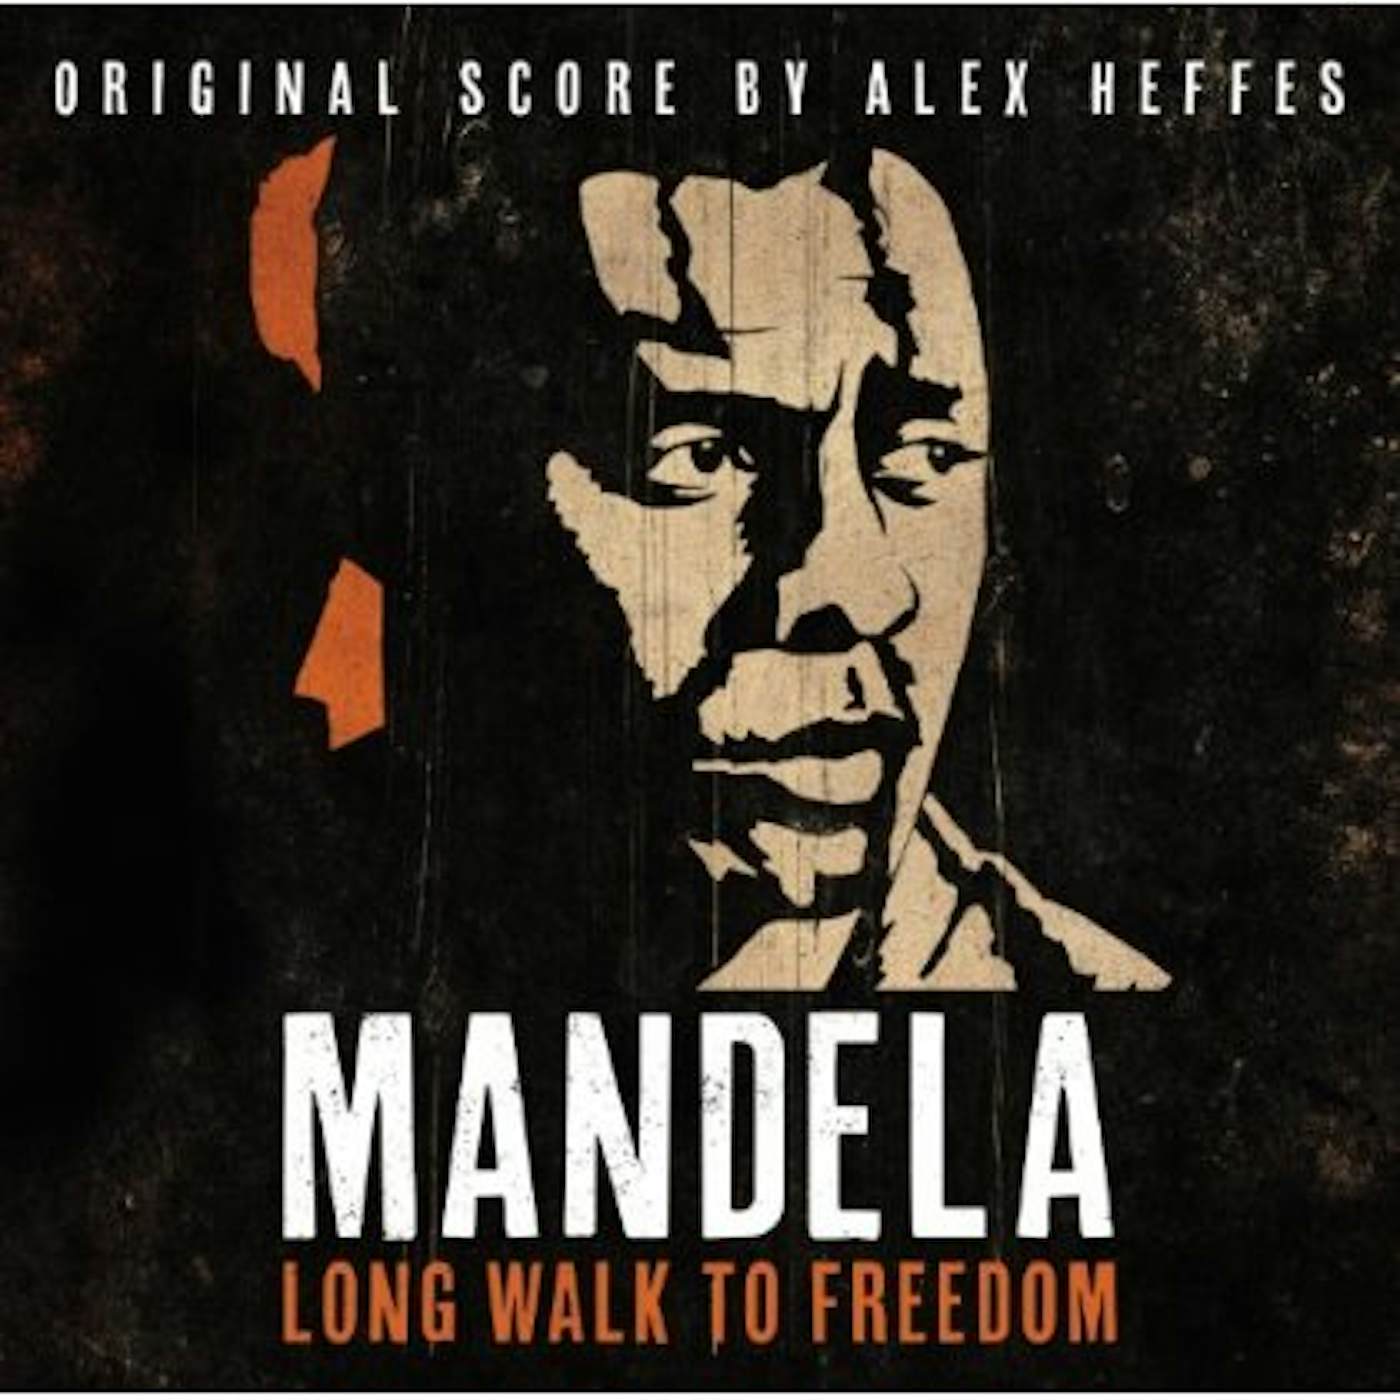 Alex Heffes MANDELA: LONG WALK TO FREEDOM (SCORE) / Original Soundtrack CD